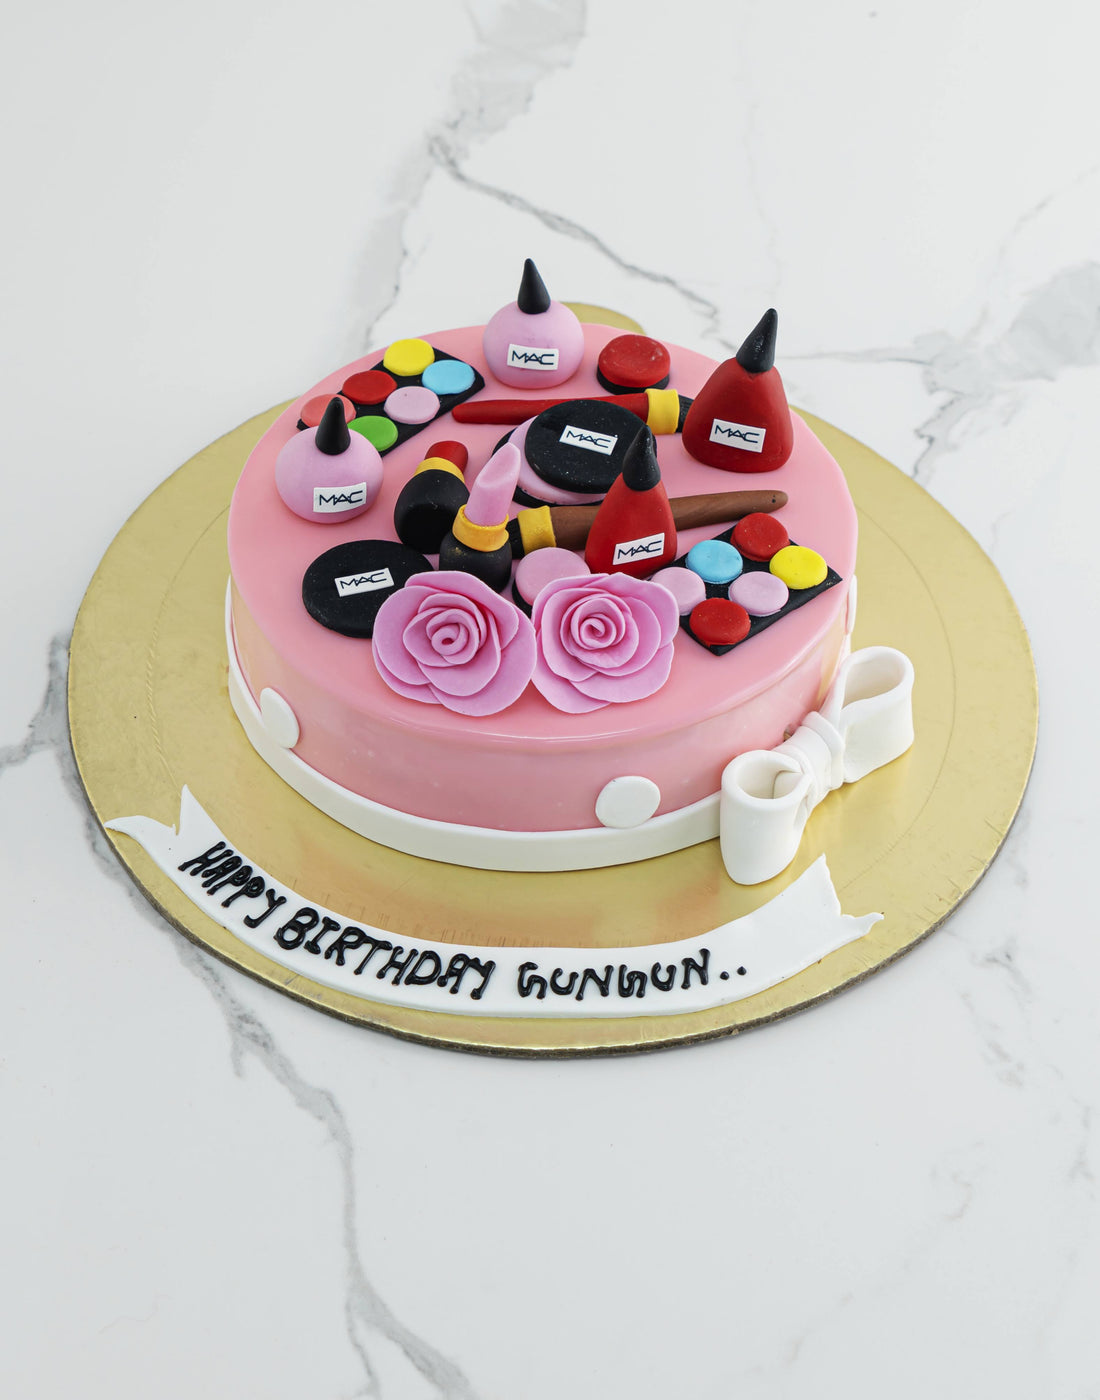 Makeup Theme Cake - Cake Designs for Women - Customized Cake In Gurgaon